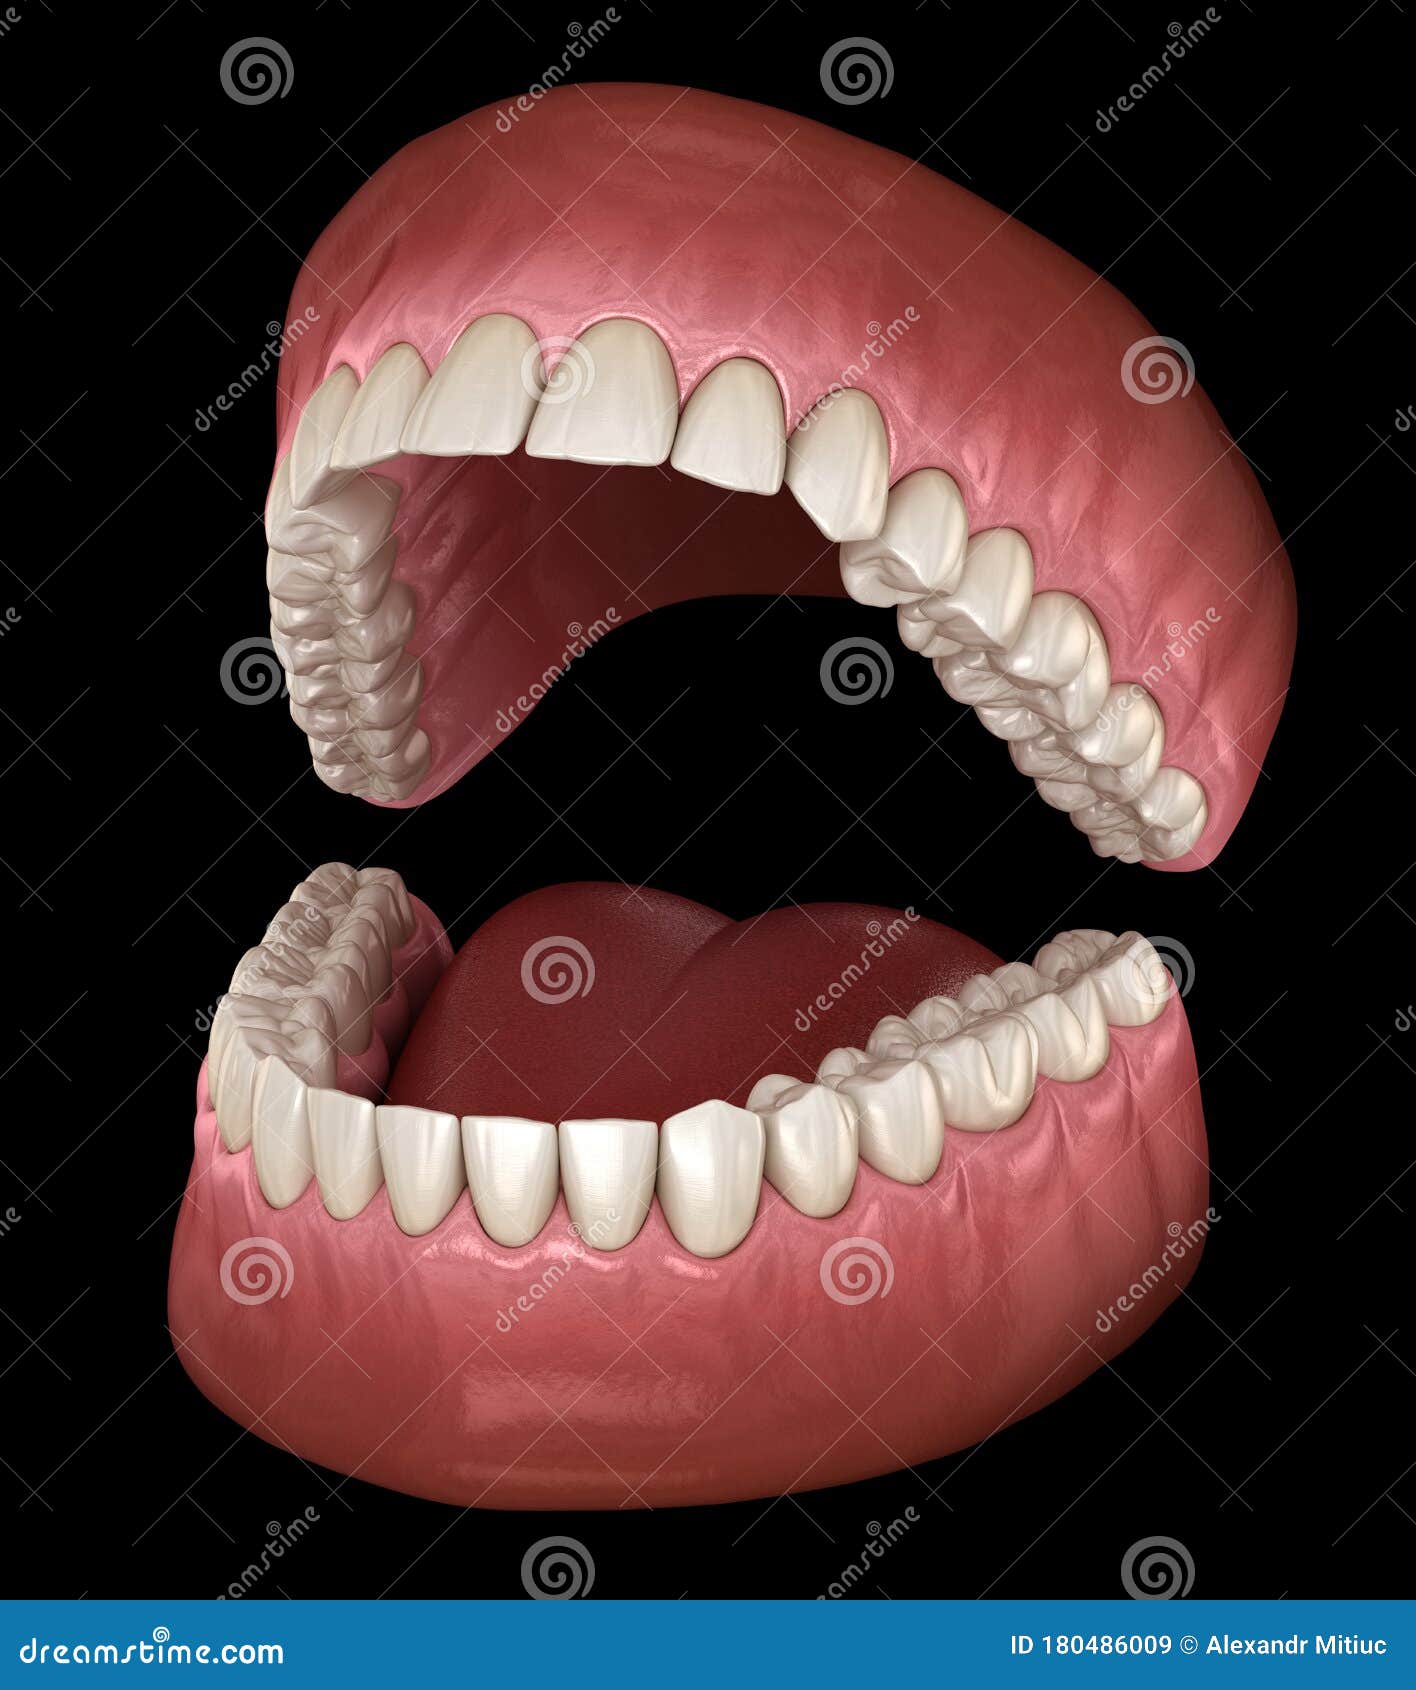 dental anatomy - opened dentures. medically accurate dental